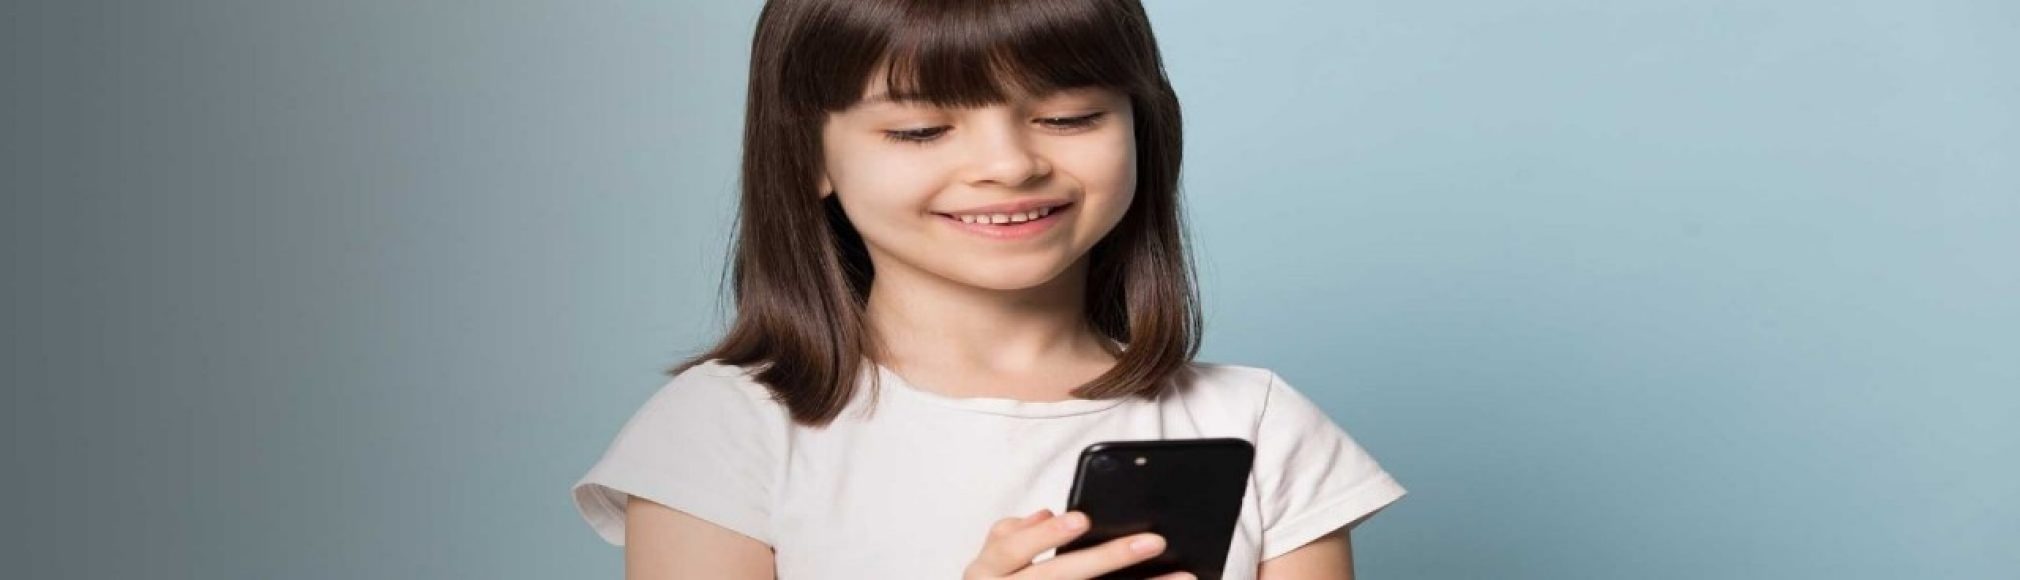 three-blogs-desktop_childs-first-smartphone-2020x580